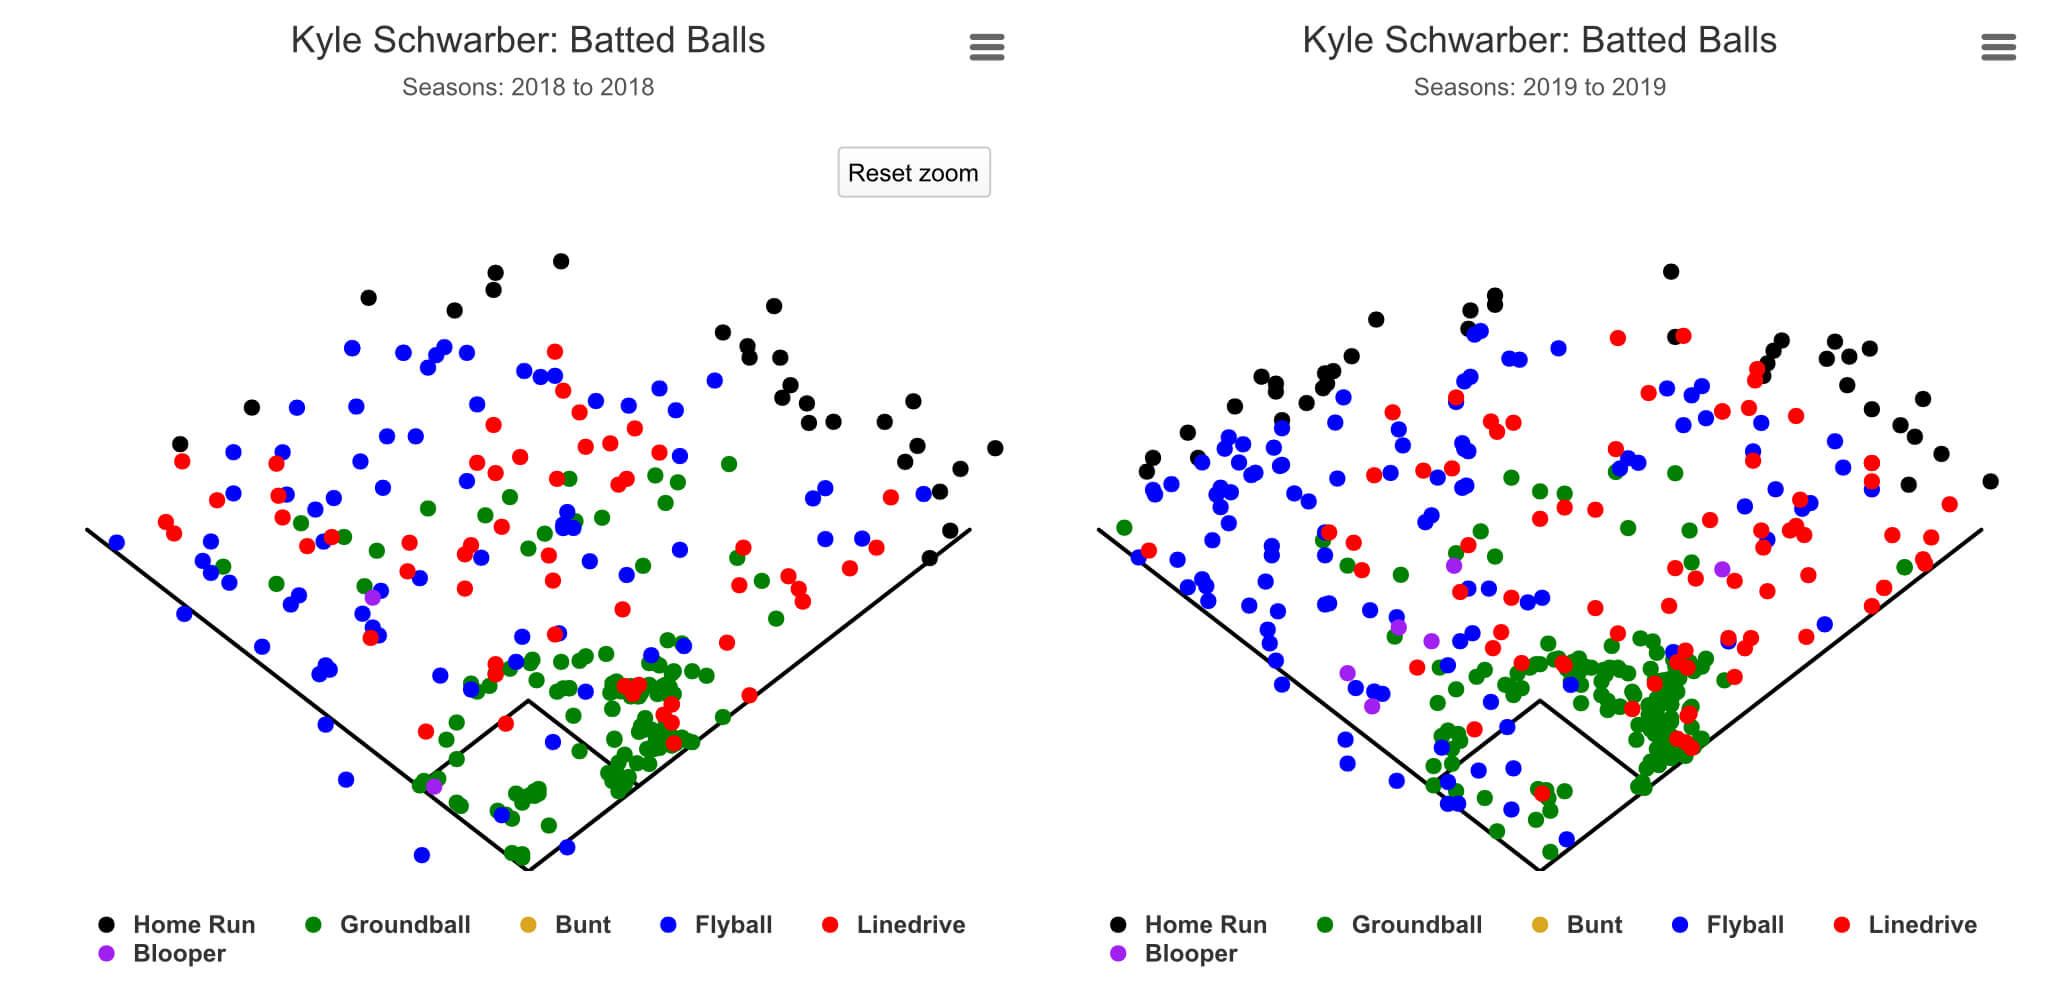 Kyle Schwarber Batted Ball Data